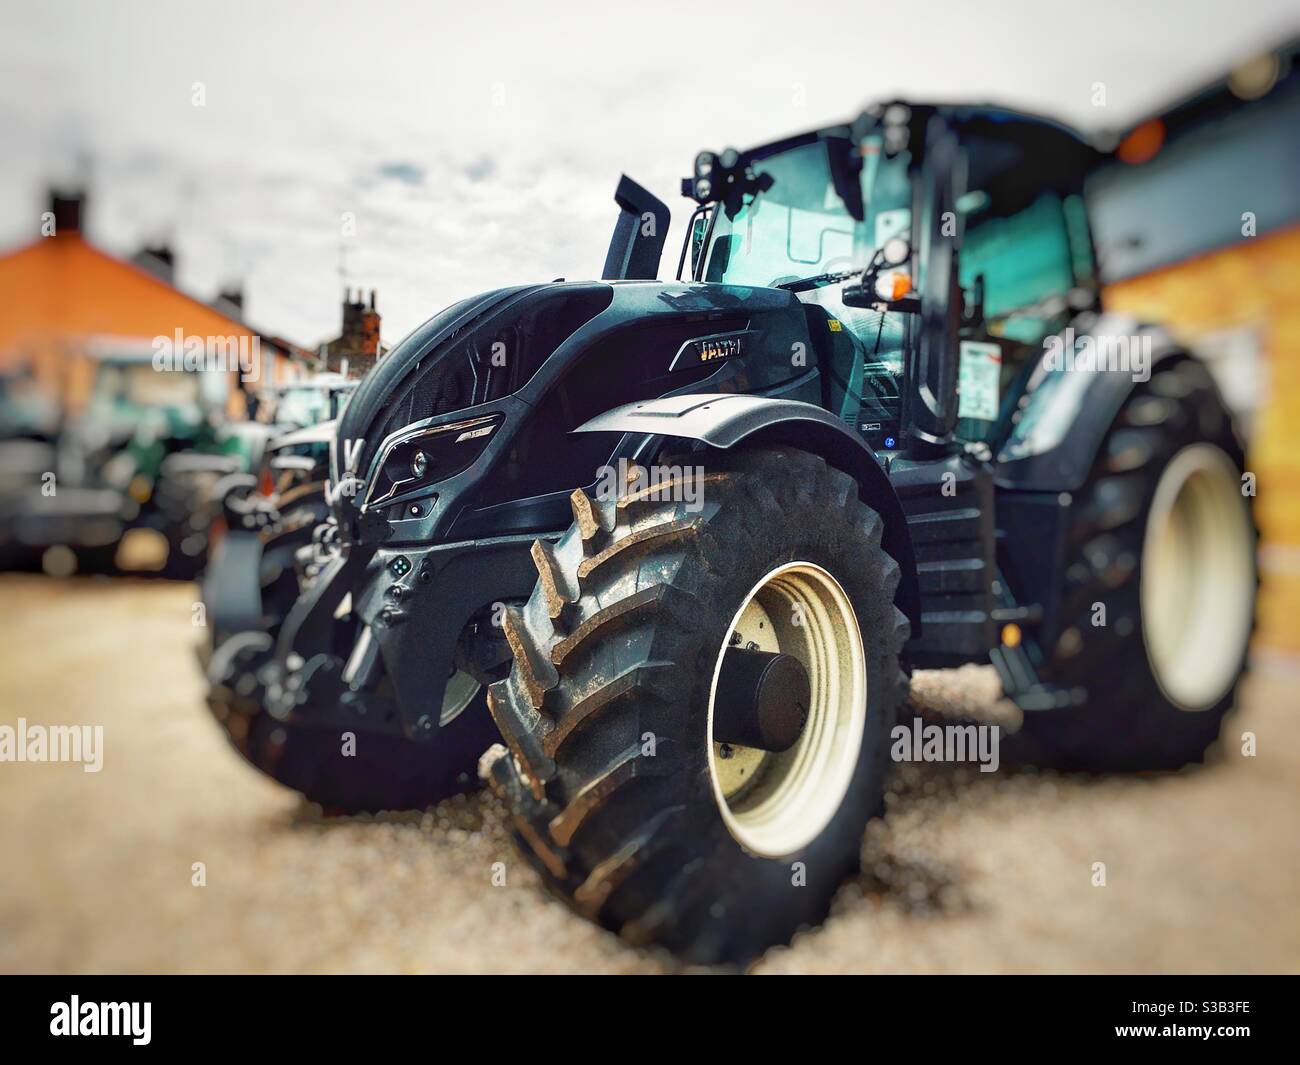 Valtra tractor Stock Photo -